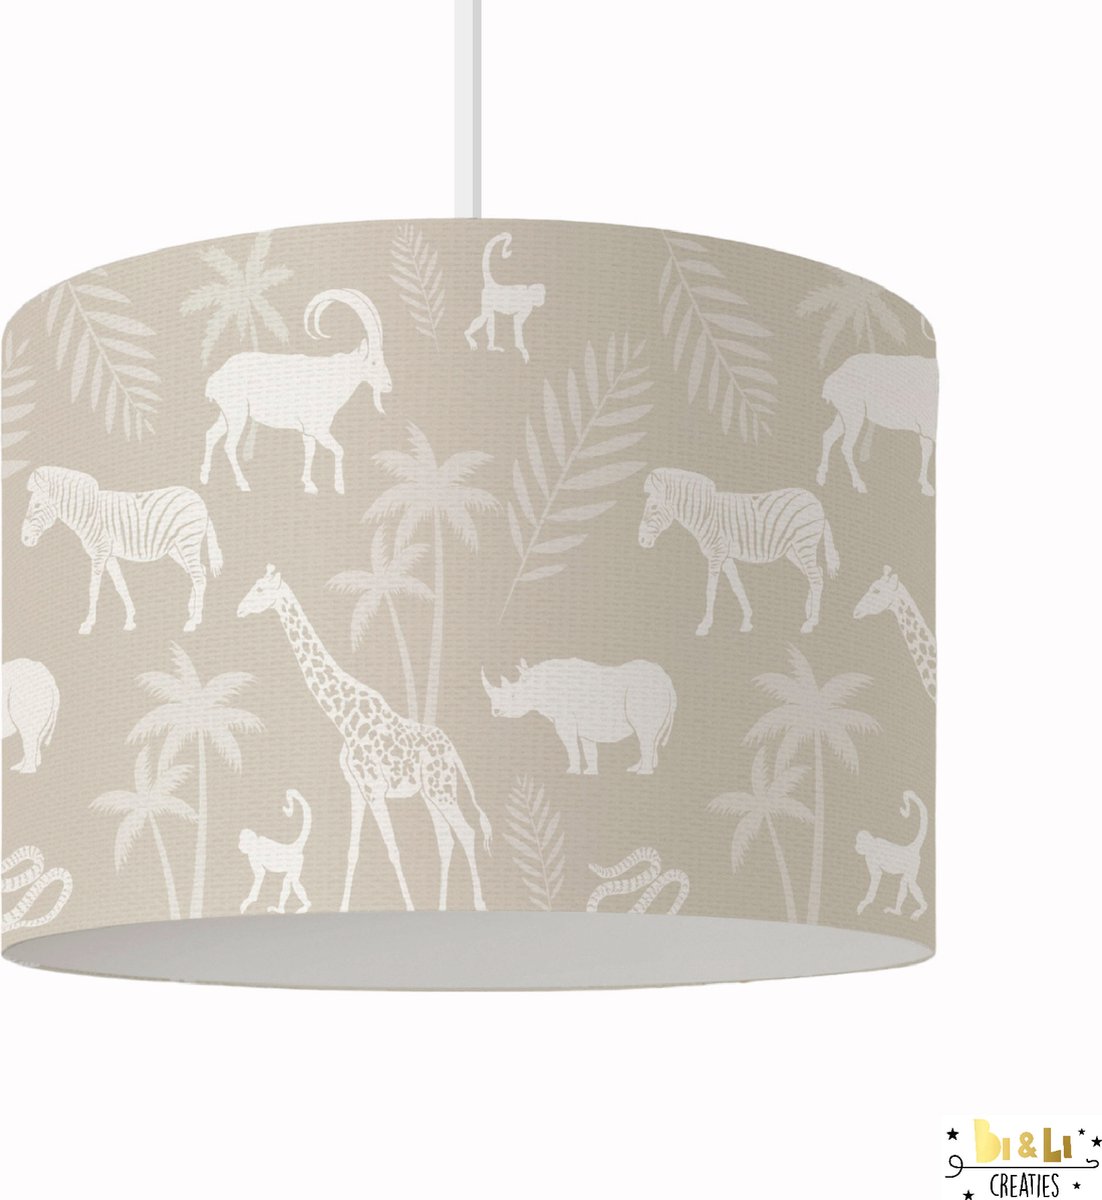 Hanglamp beige jungle dieren - lampen - 30x30x24 cm - kinder & babykamer - kunststof - wit - excl. lichtbron